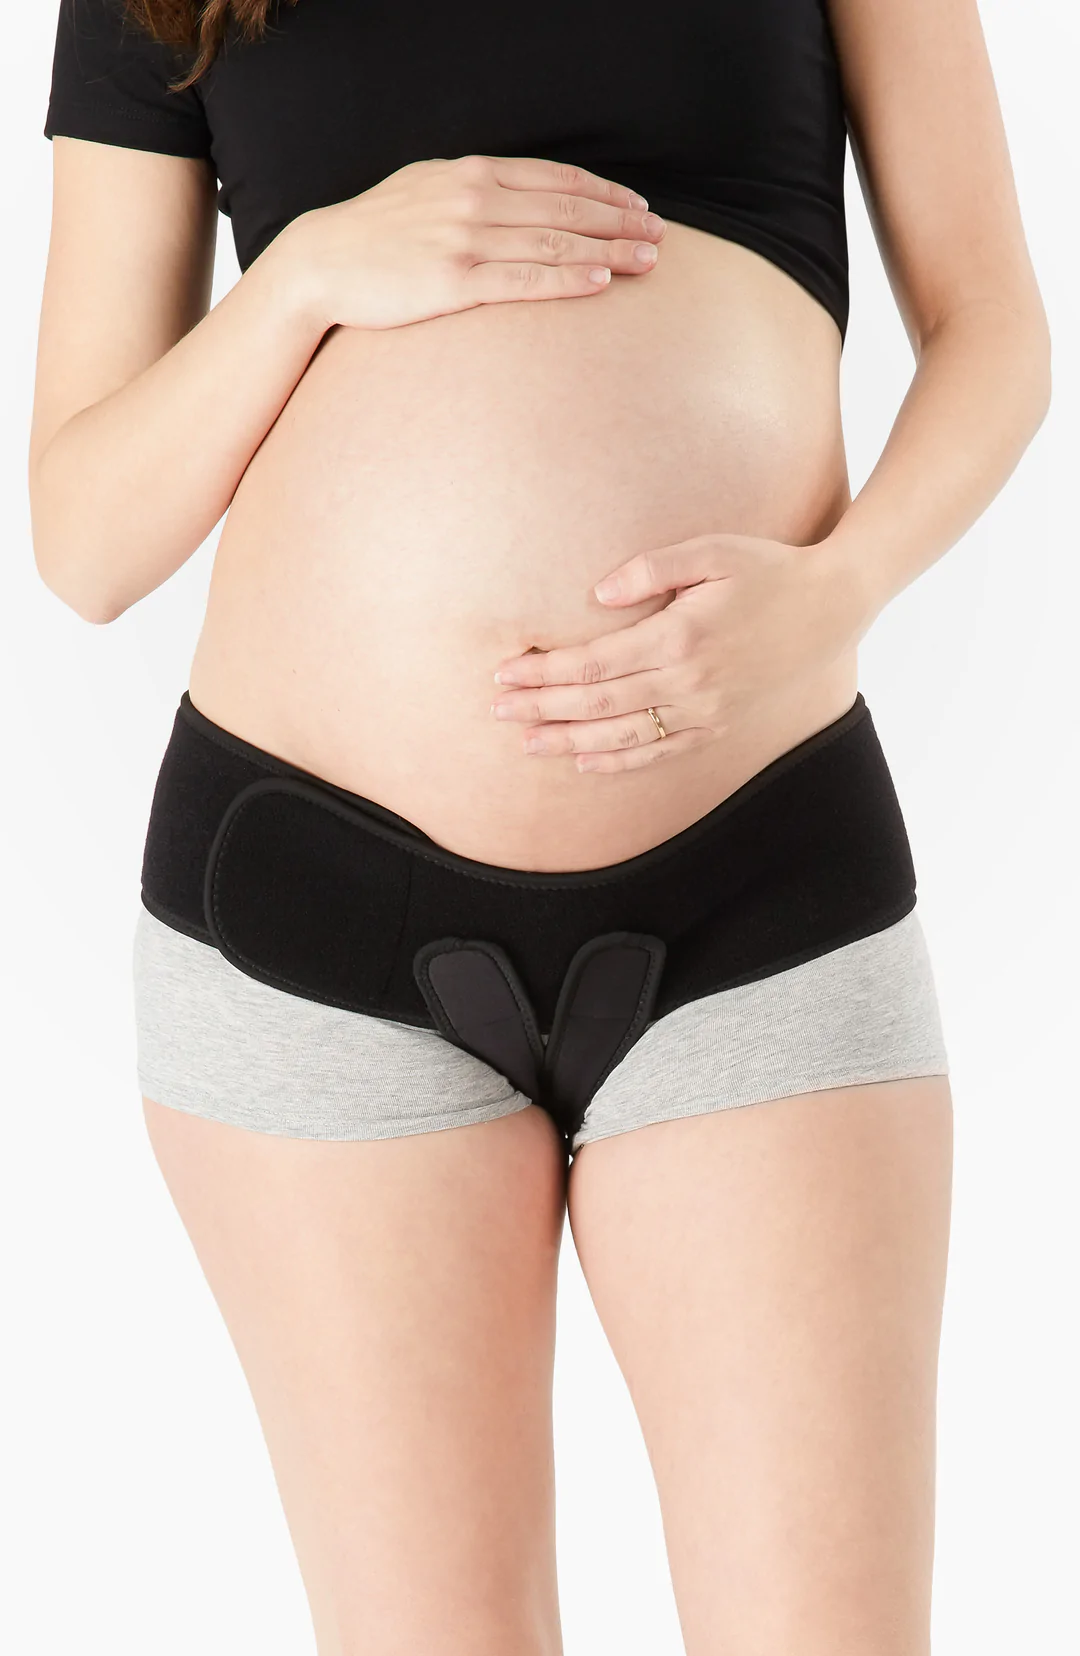 Best Pelvic Support Belt For Pregnancy: The V Sling